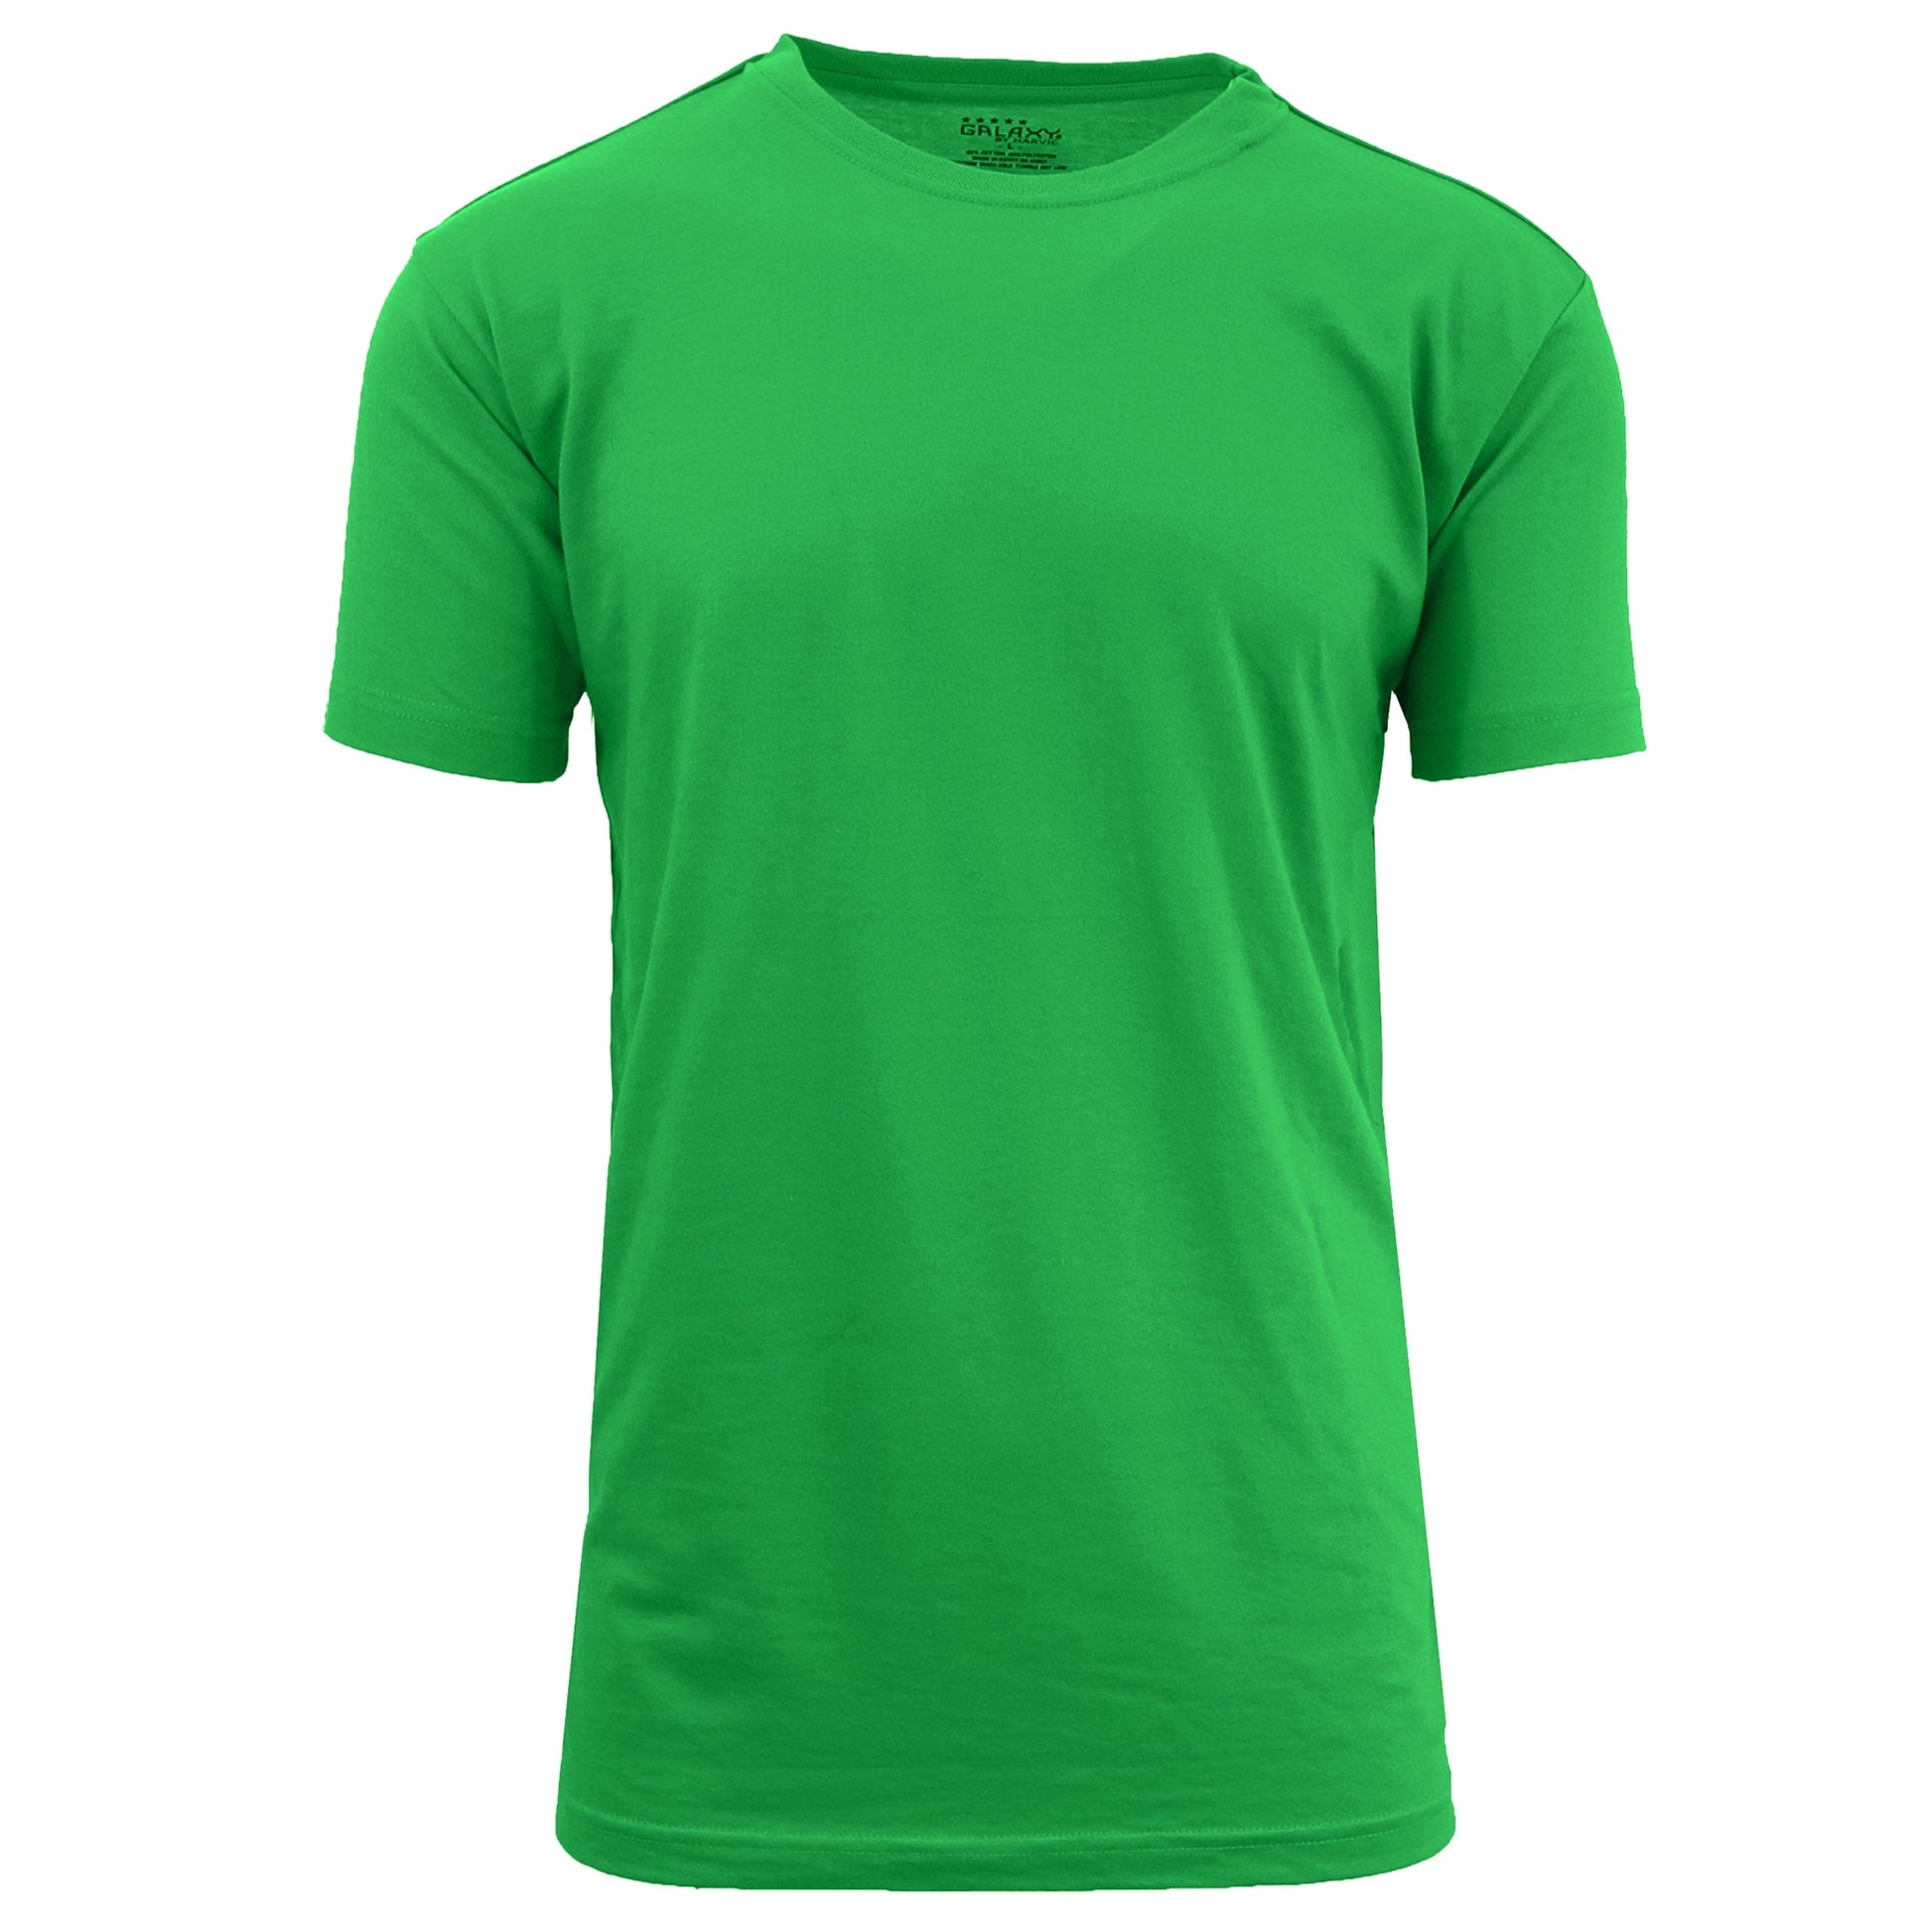 BOXY Premium Cotton Round Neck T-shirt - Smart Green